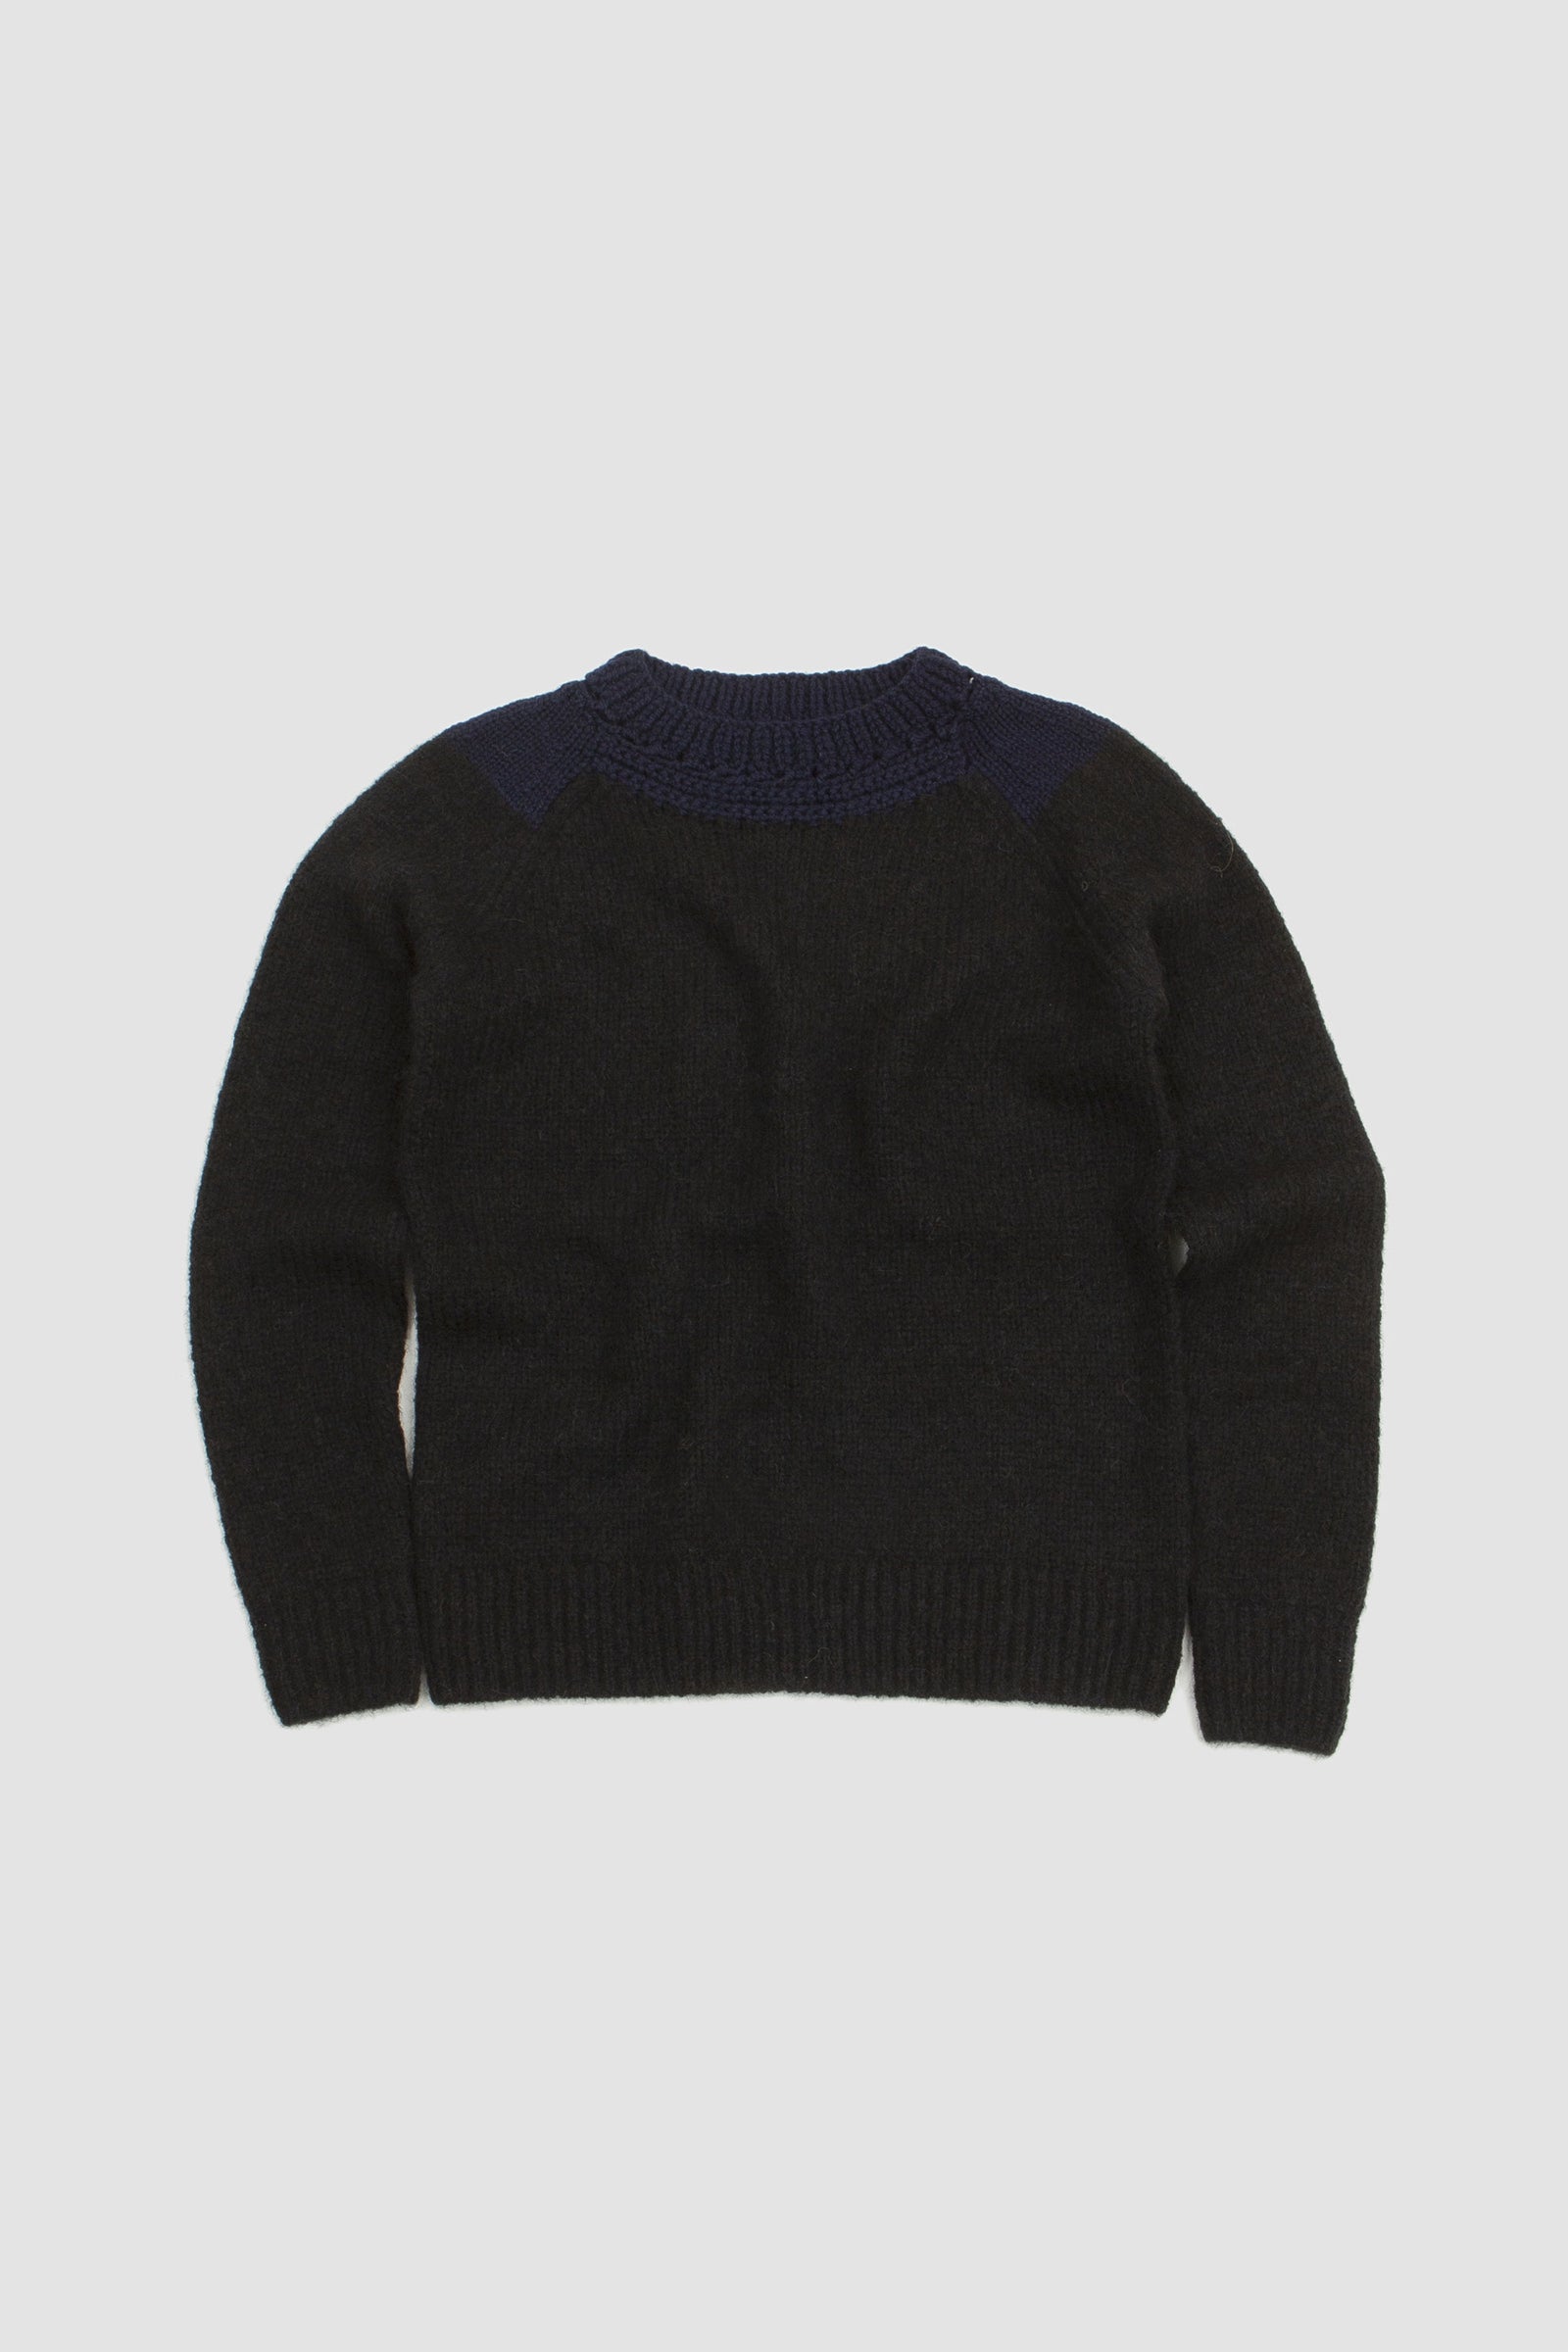 SPORTIVO [Morgan sweater black]